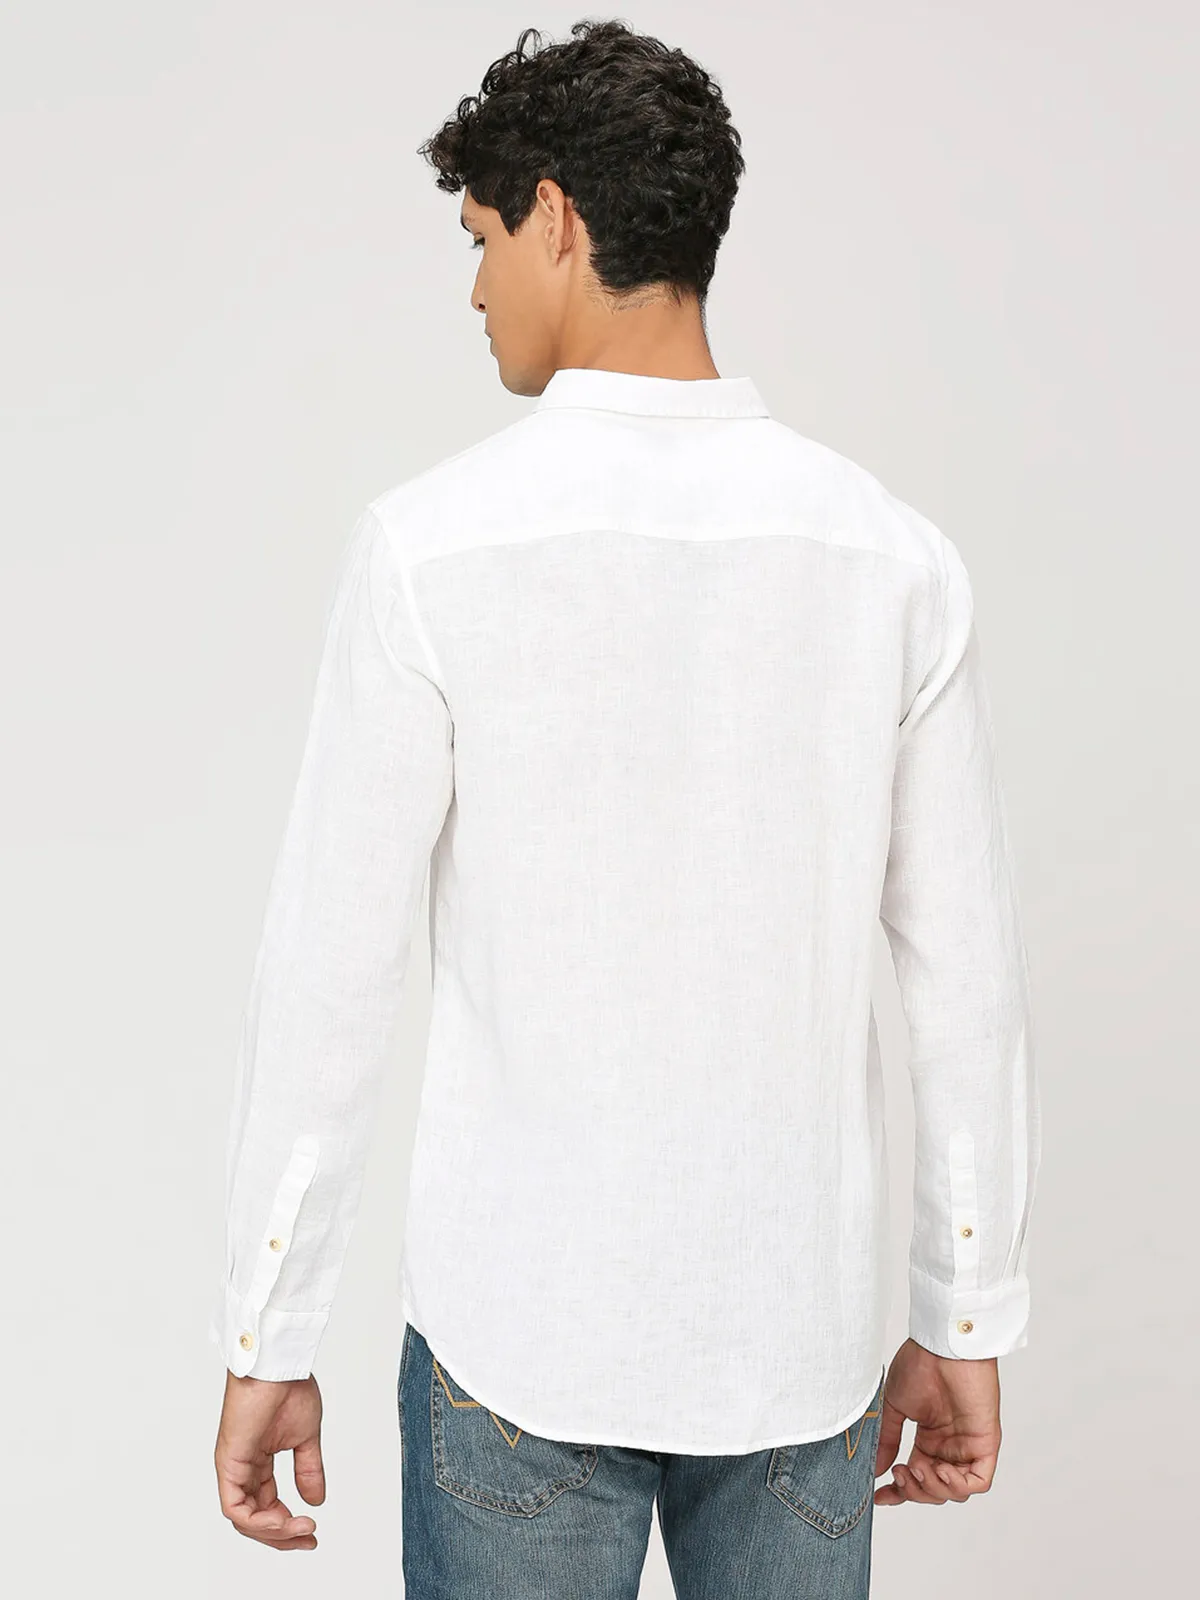 Pepe Jeans white linen plain shirt